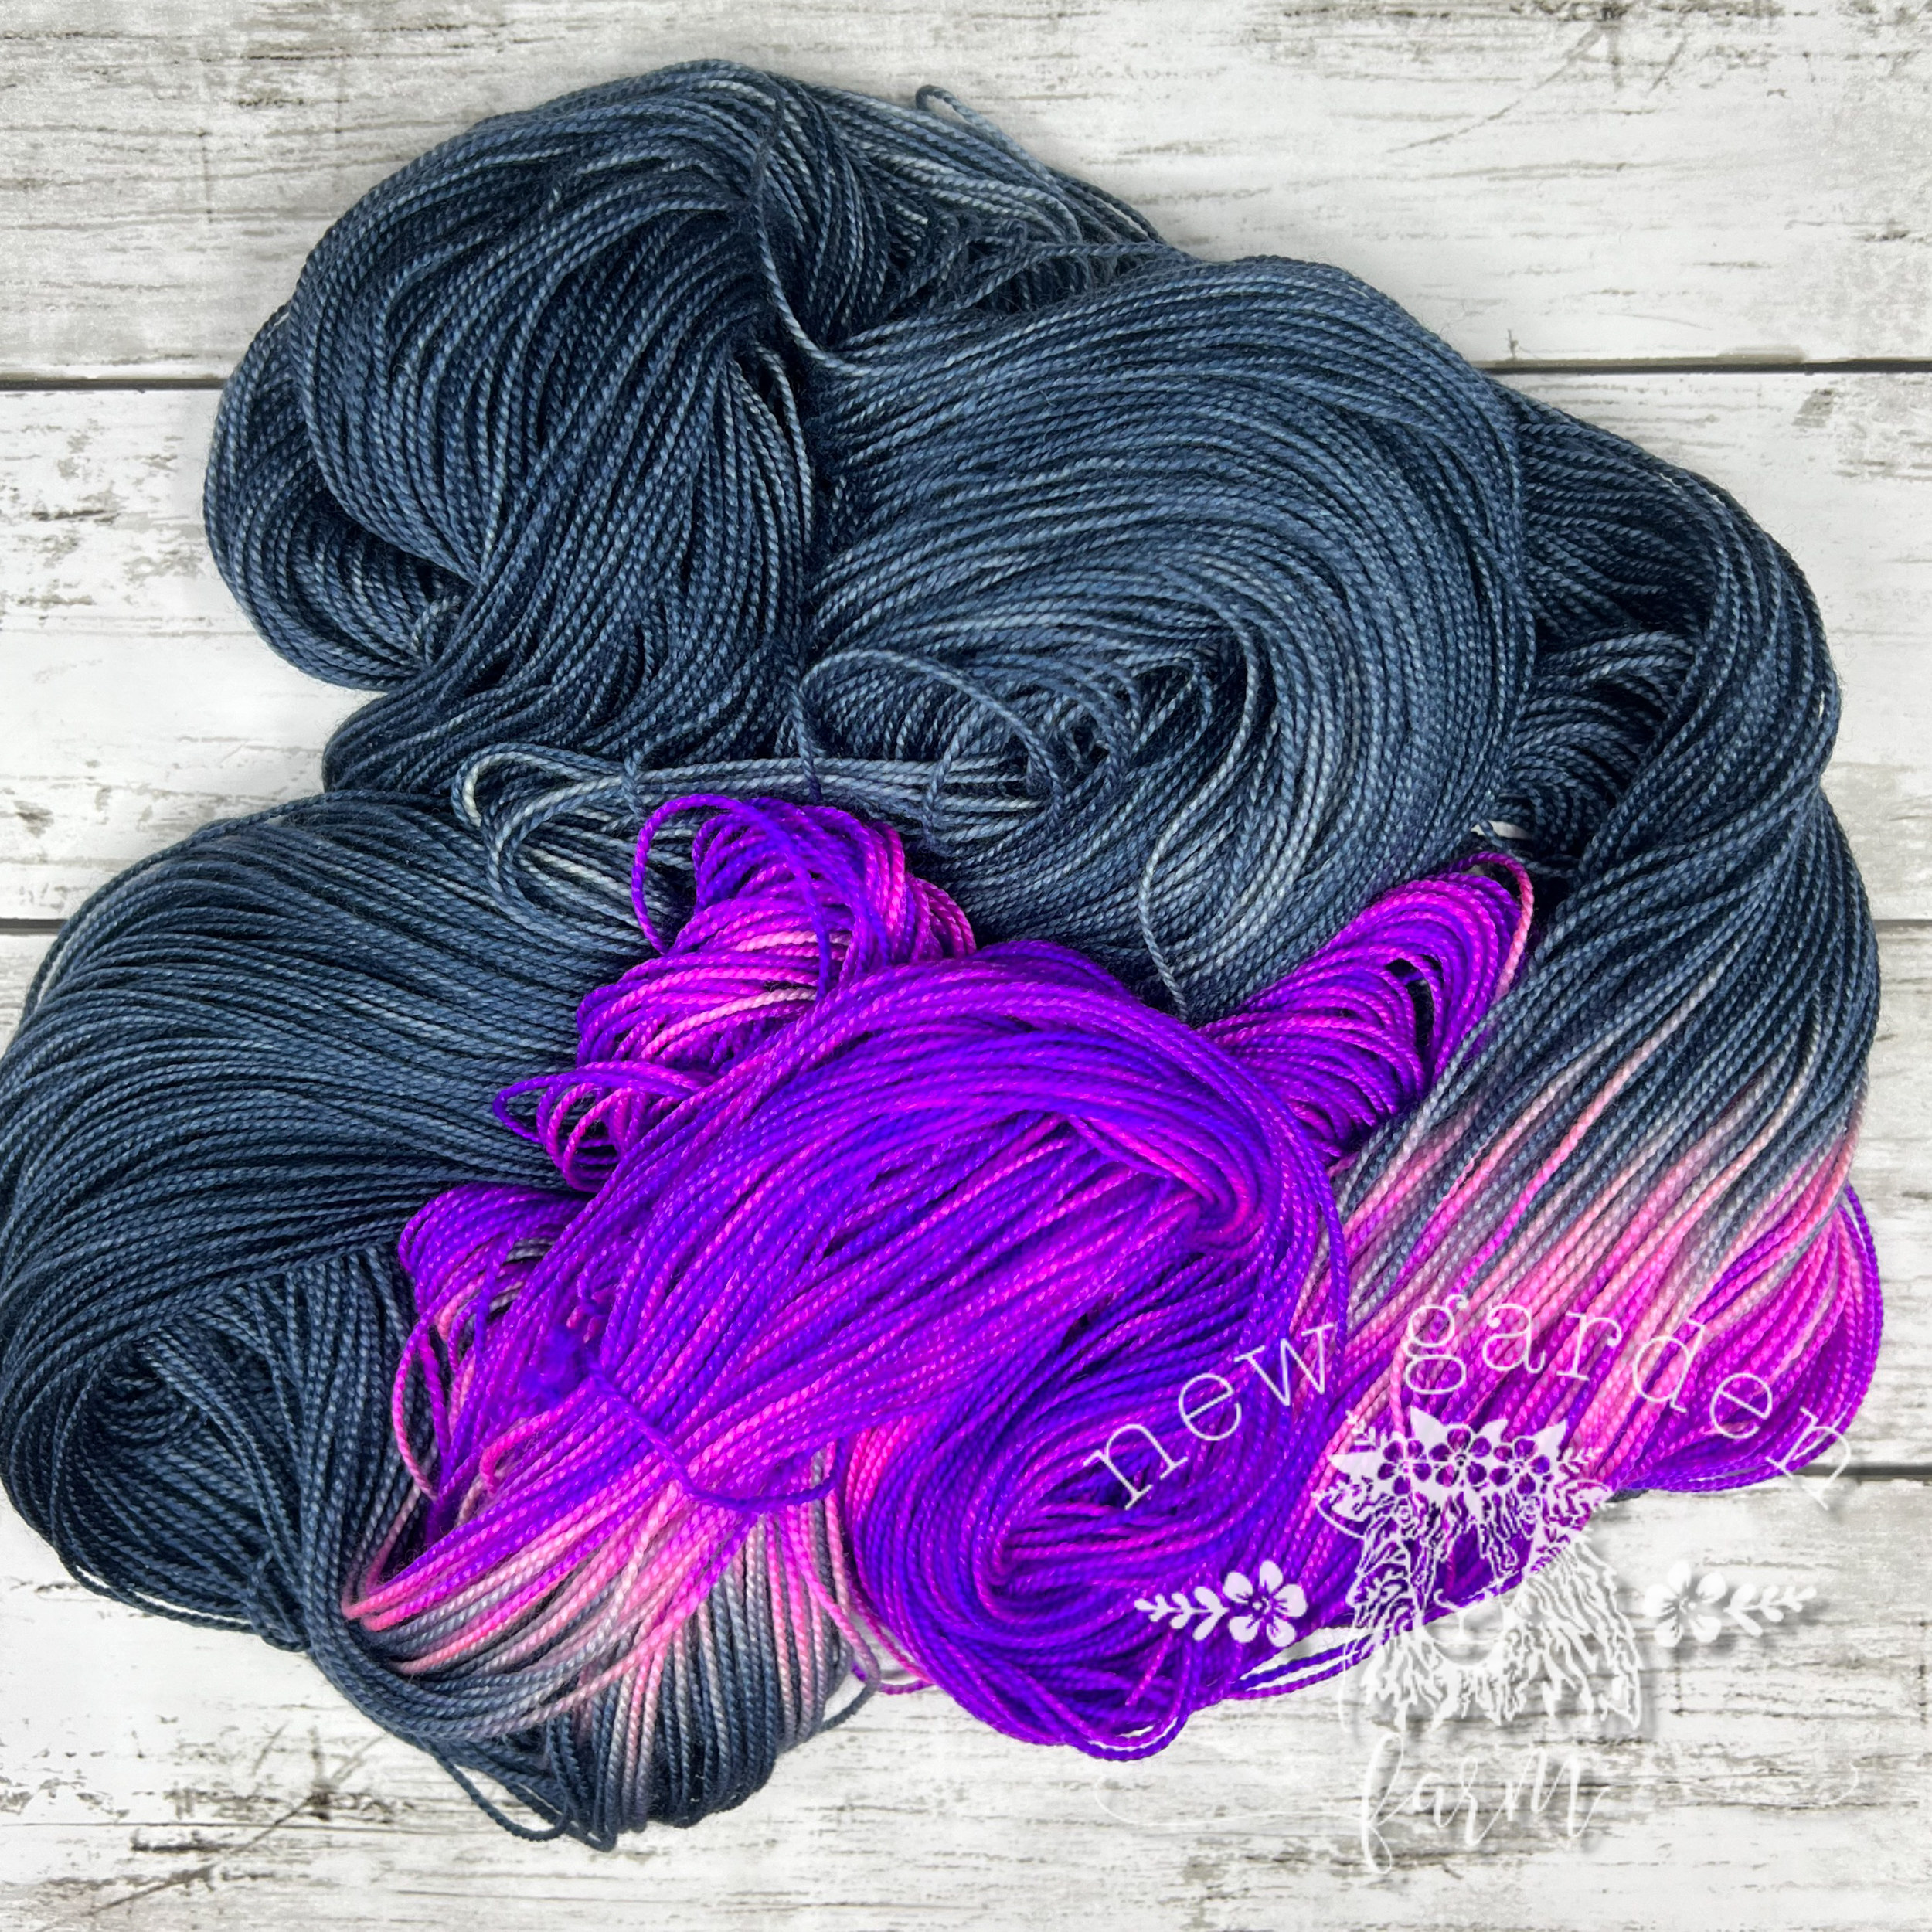 denim blue and iris purple hand dyed yarn on a wool/silk base